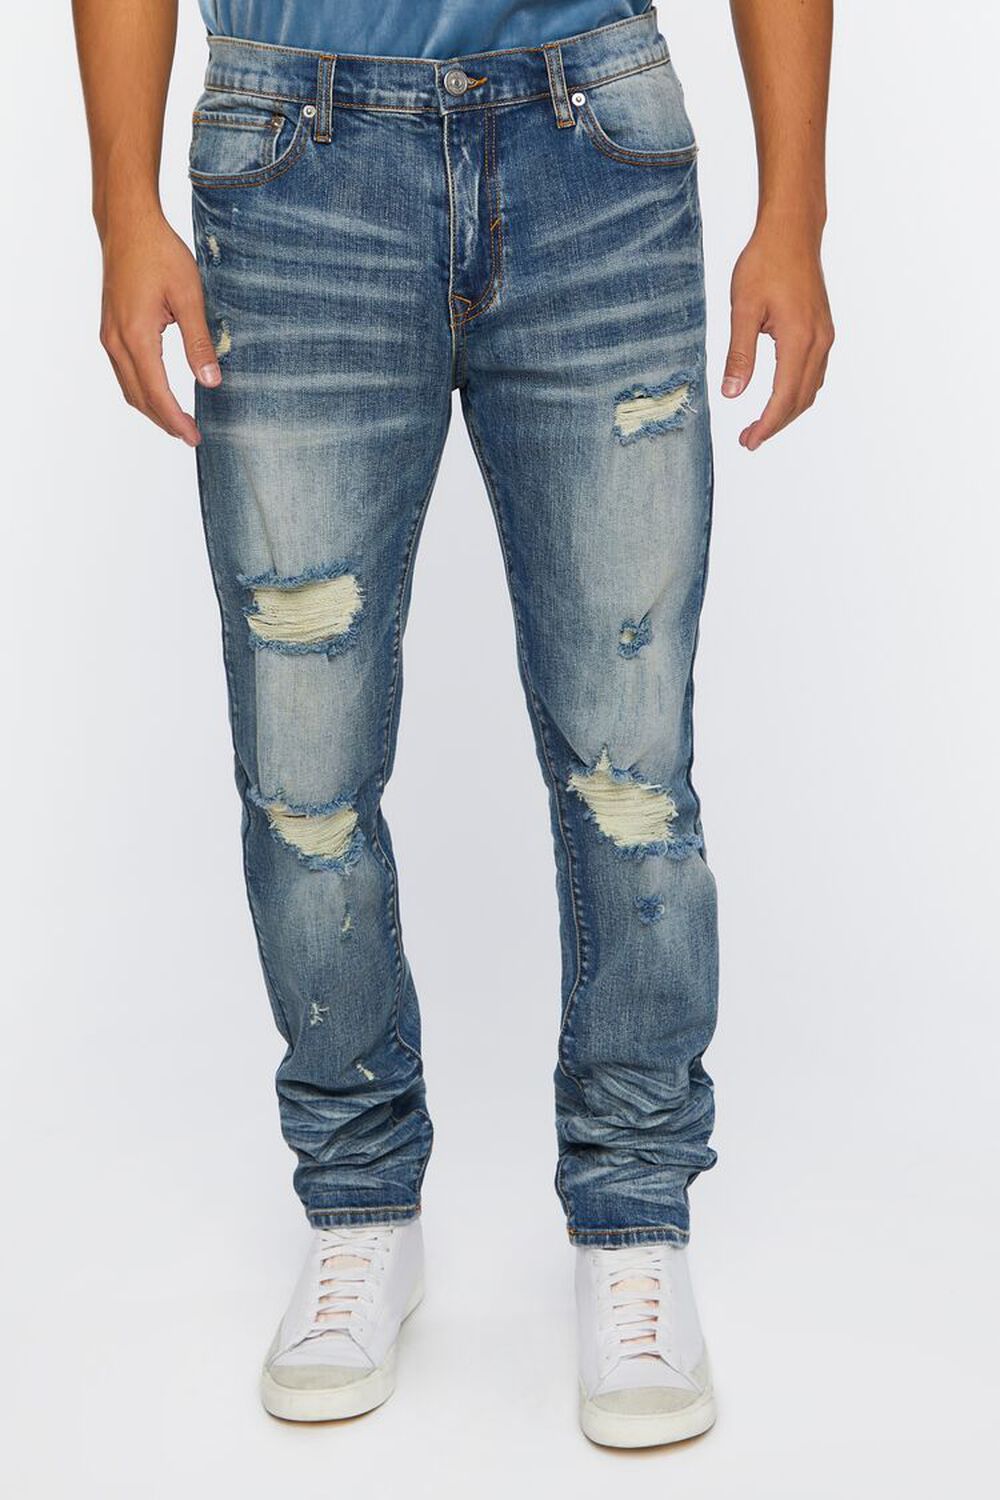 MEDIUM DENIM Distressed Stone Wash Slim-Fit Jeans, image 2